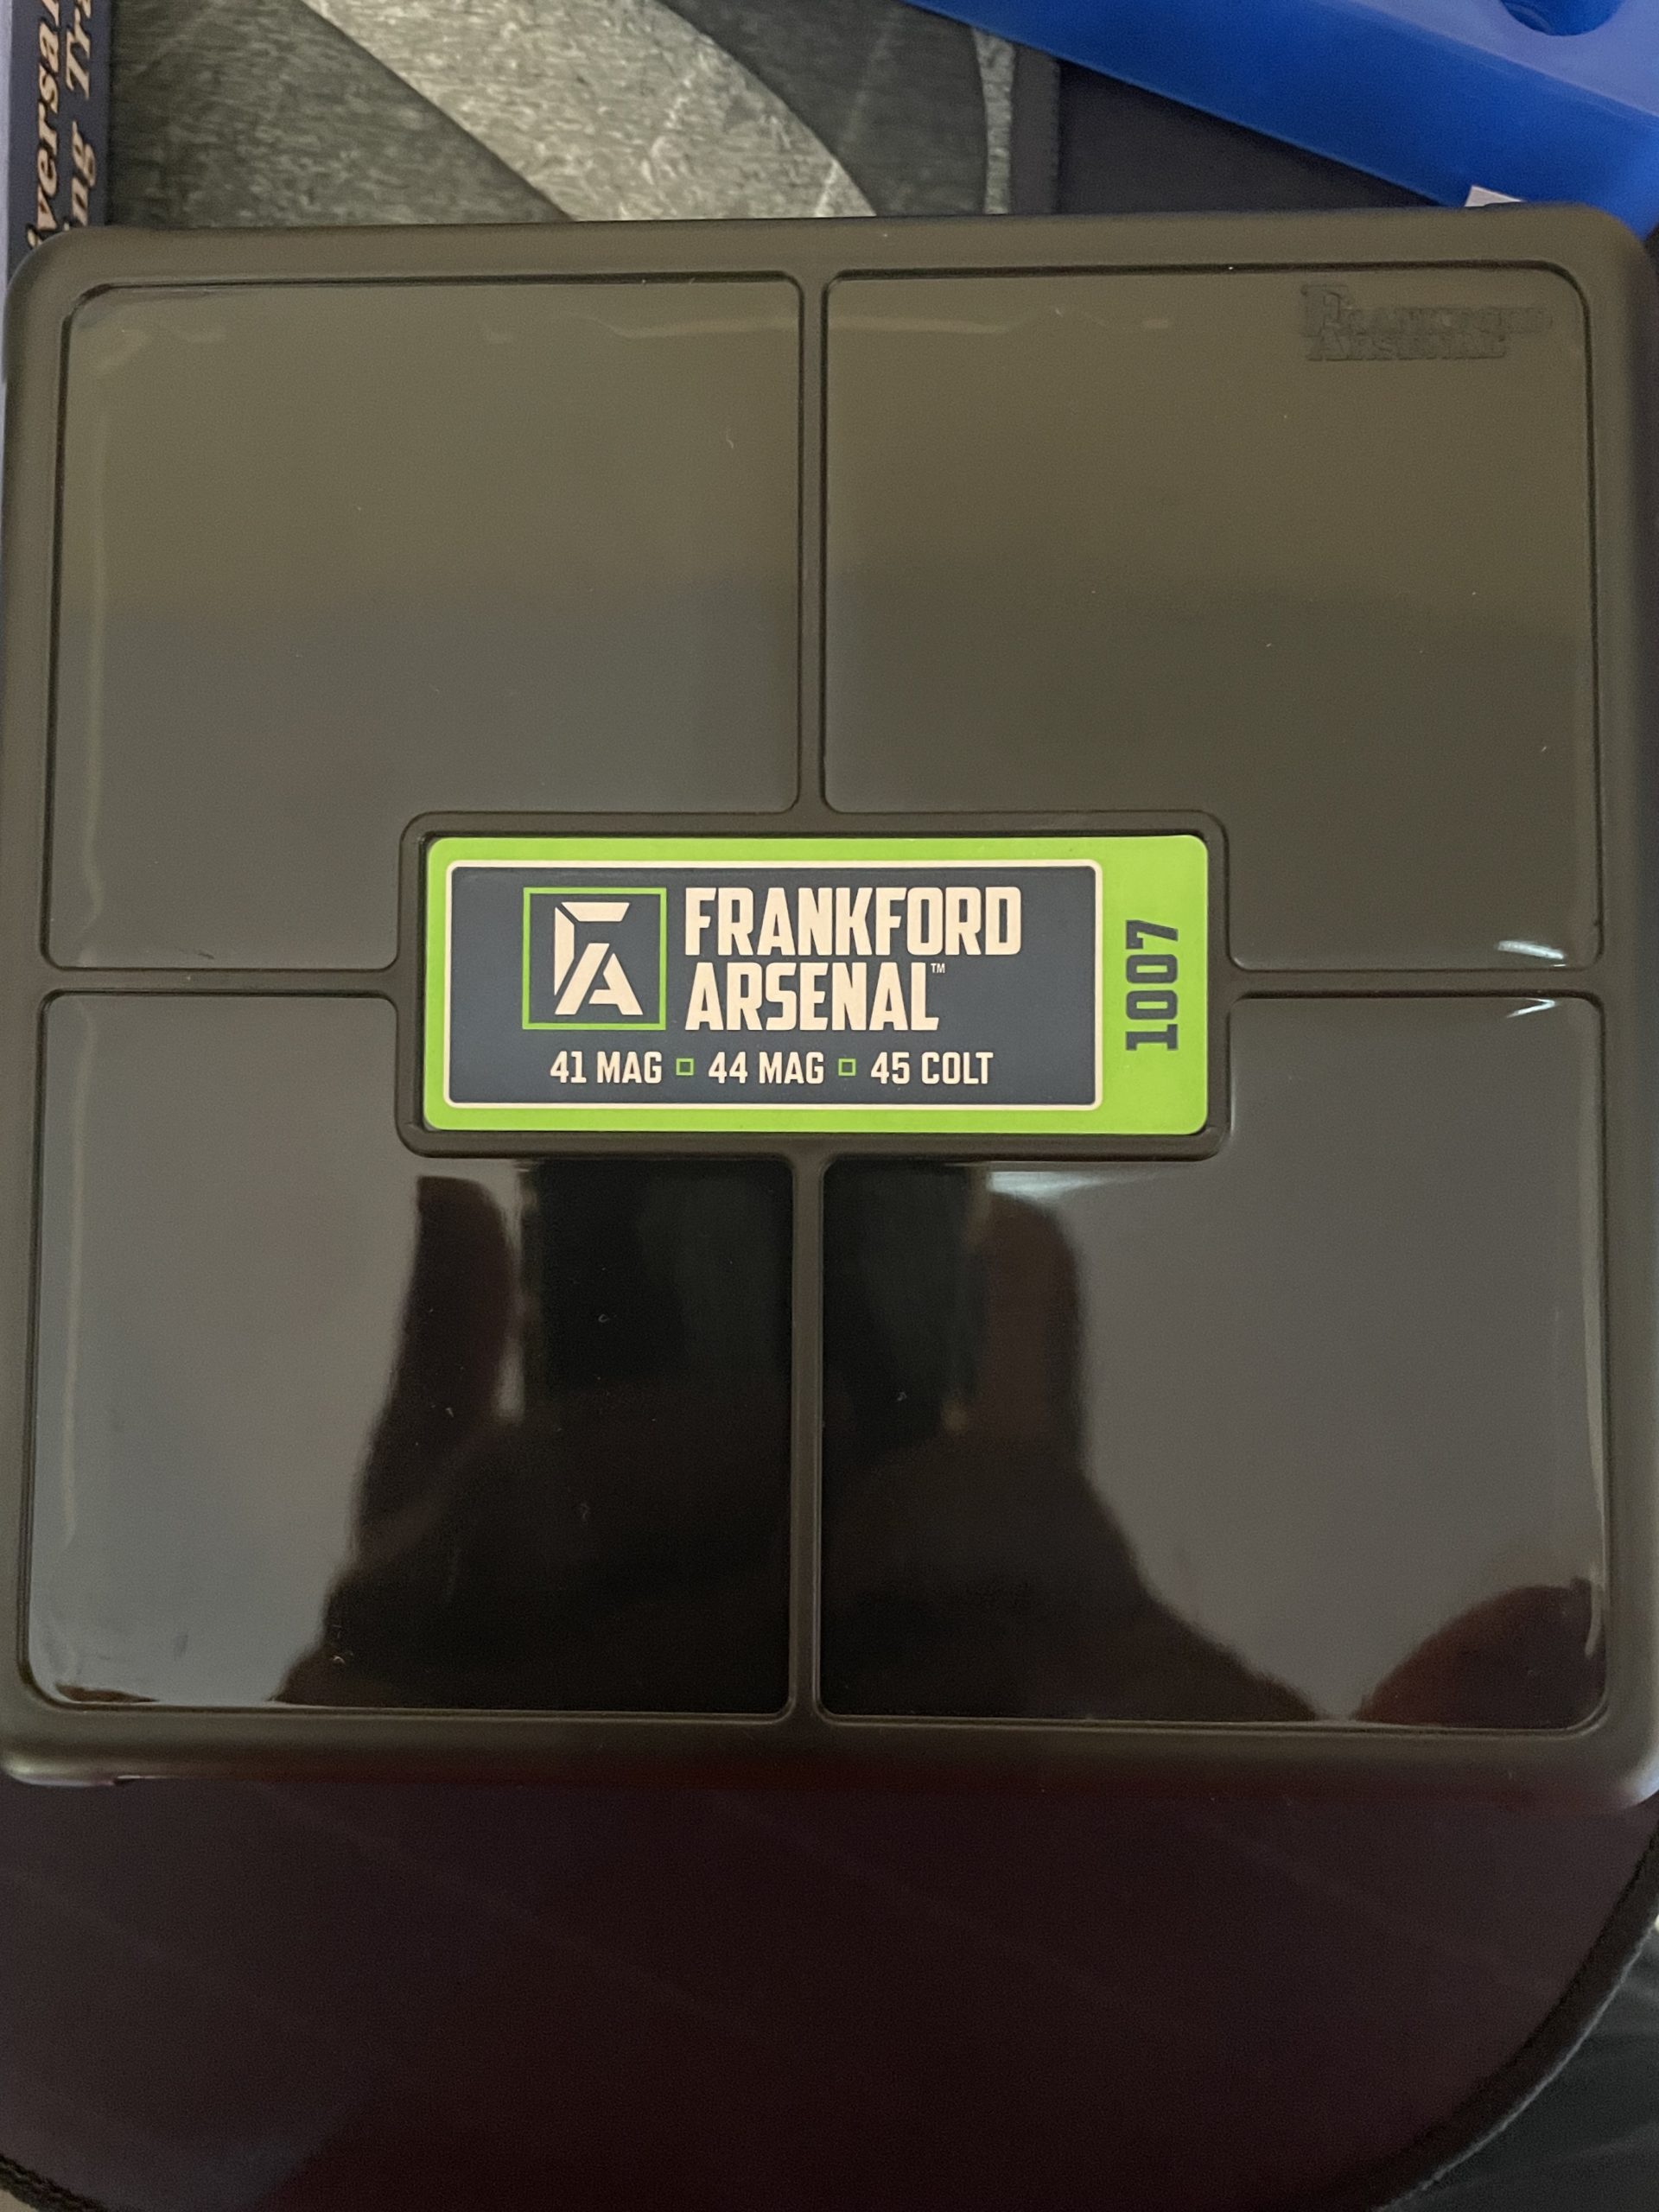 Frankford Arsenal Ammo Box lid closed